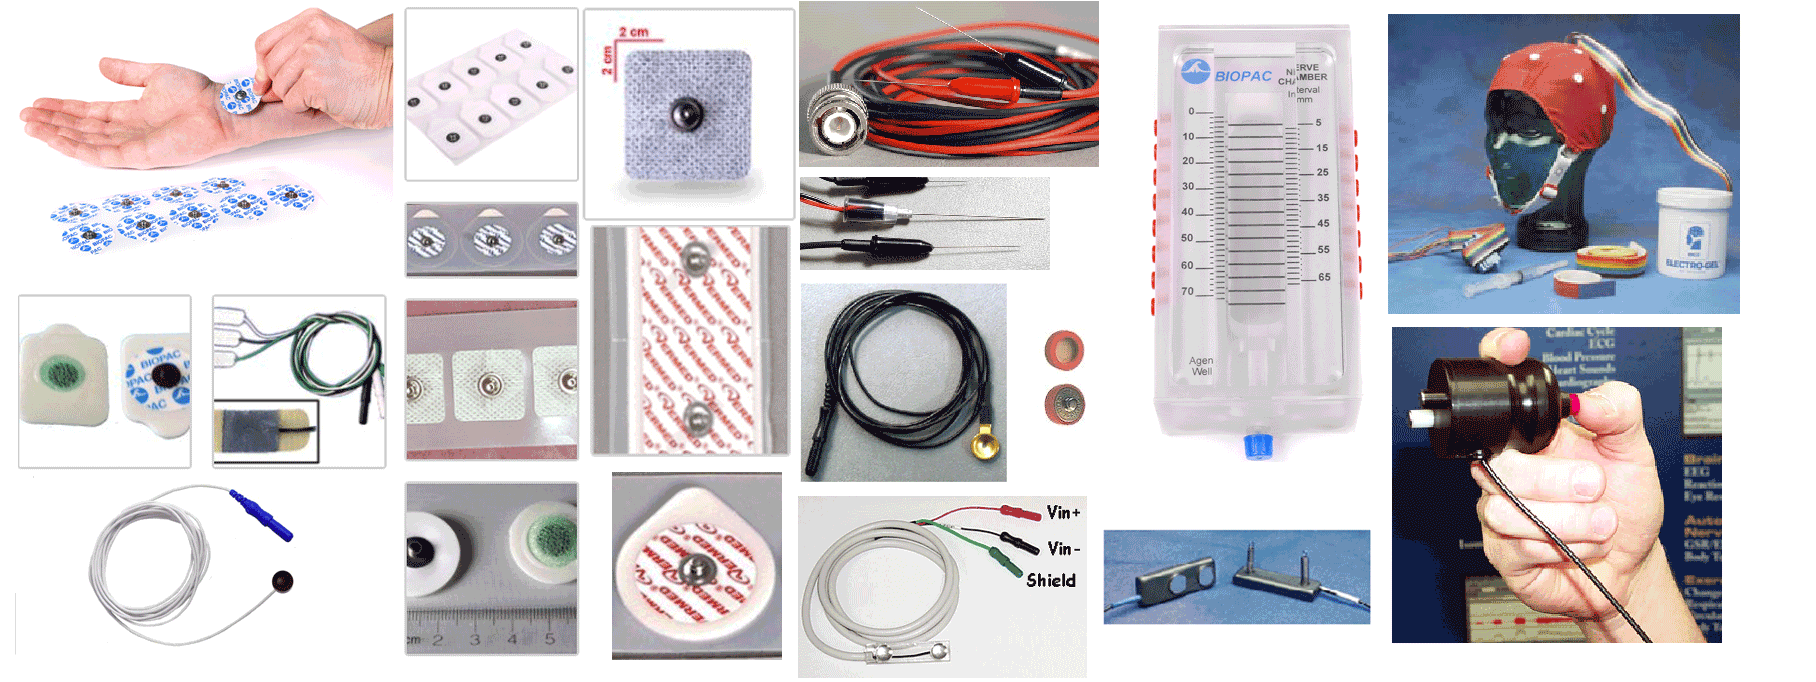 BIOPAC reusable and disposable electrodes